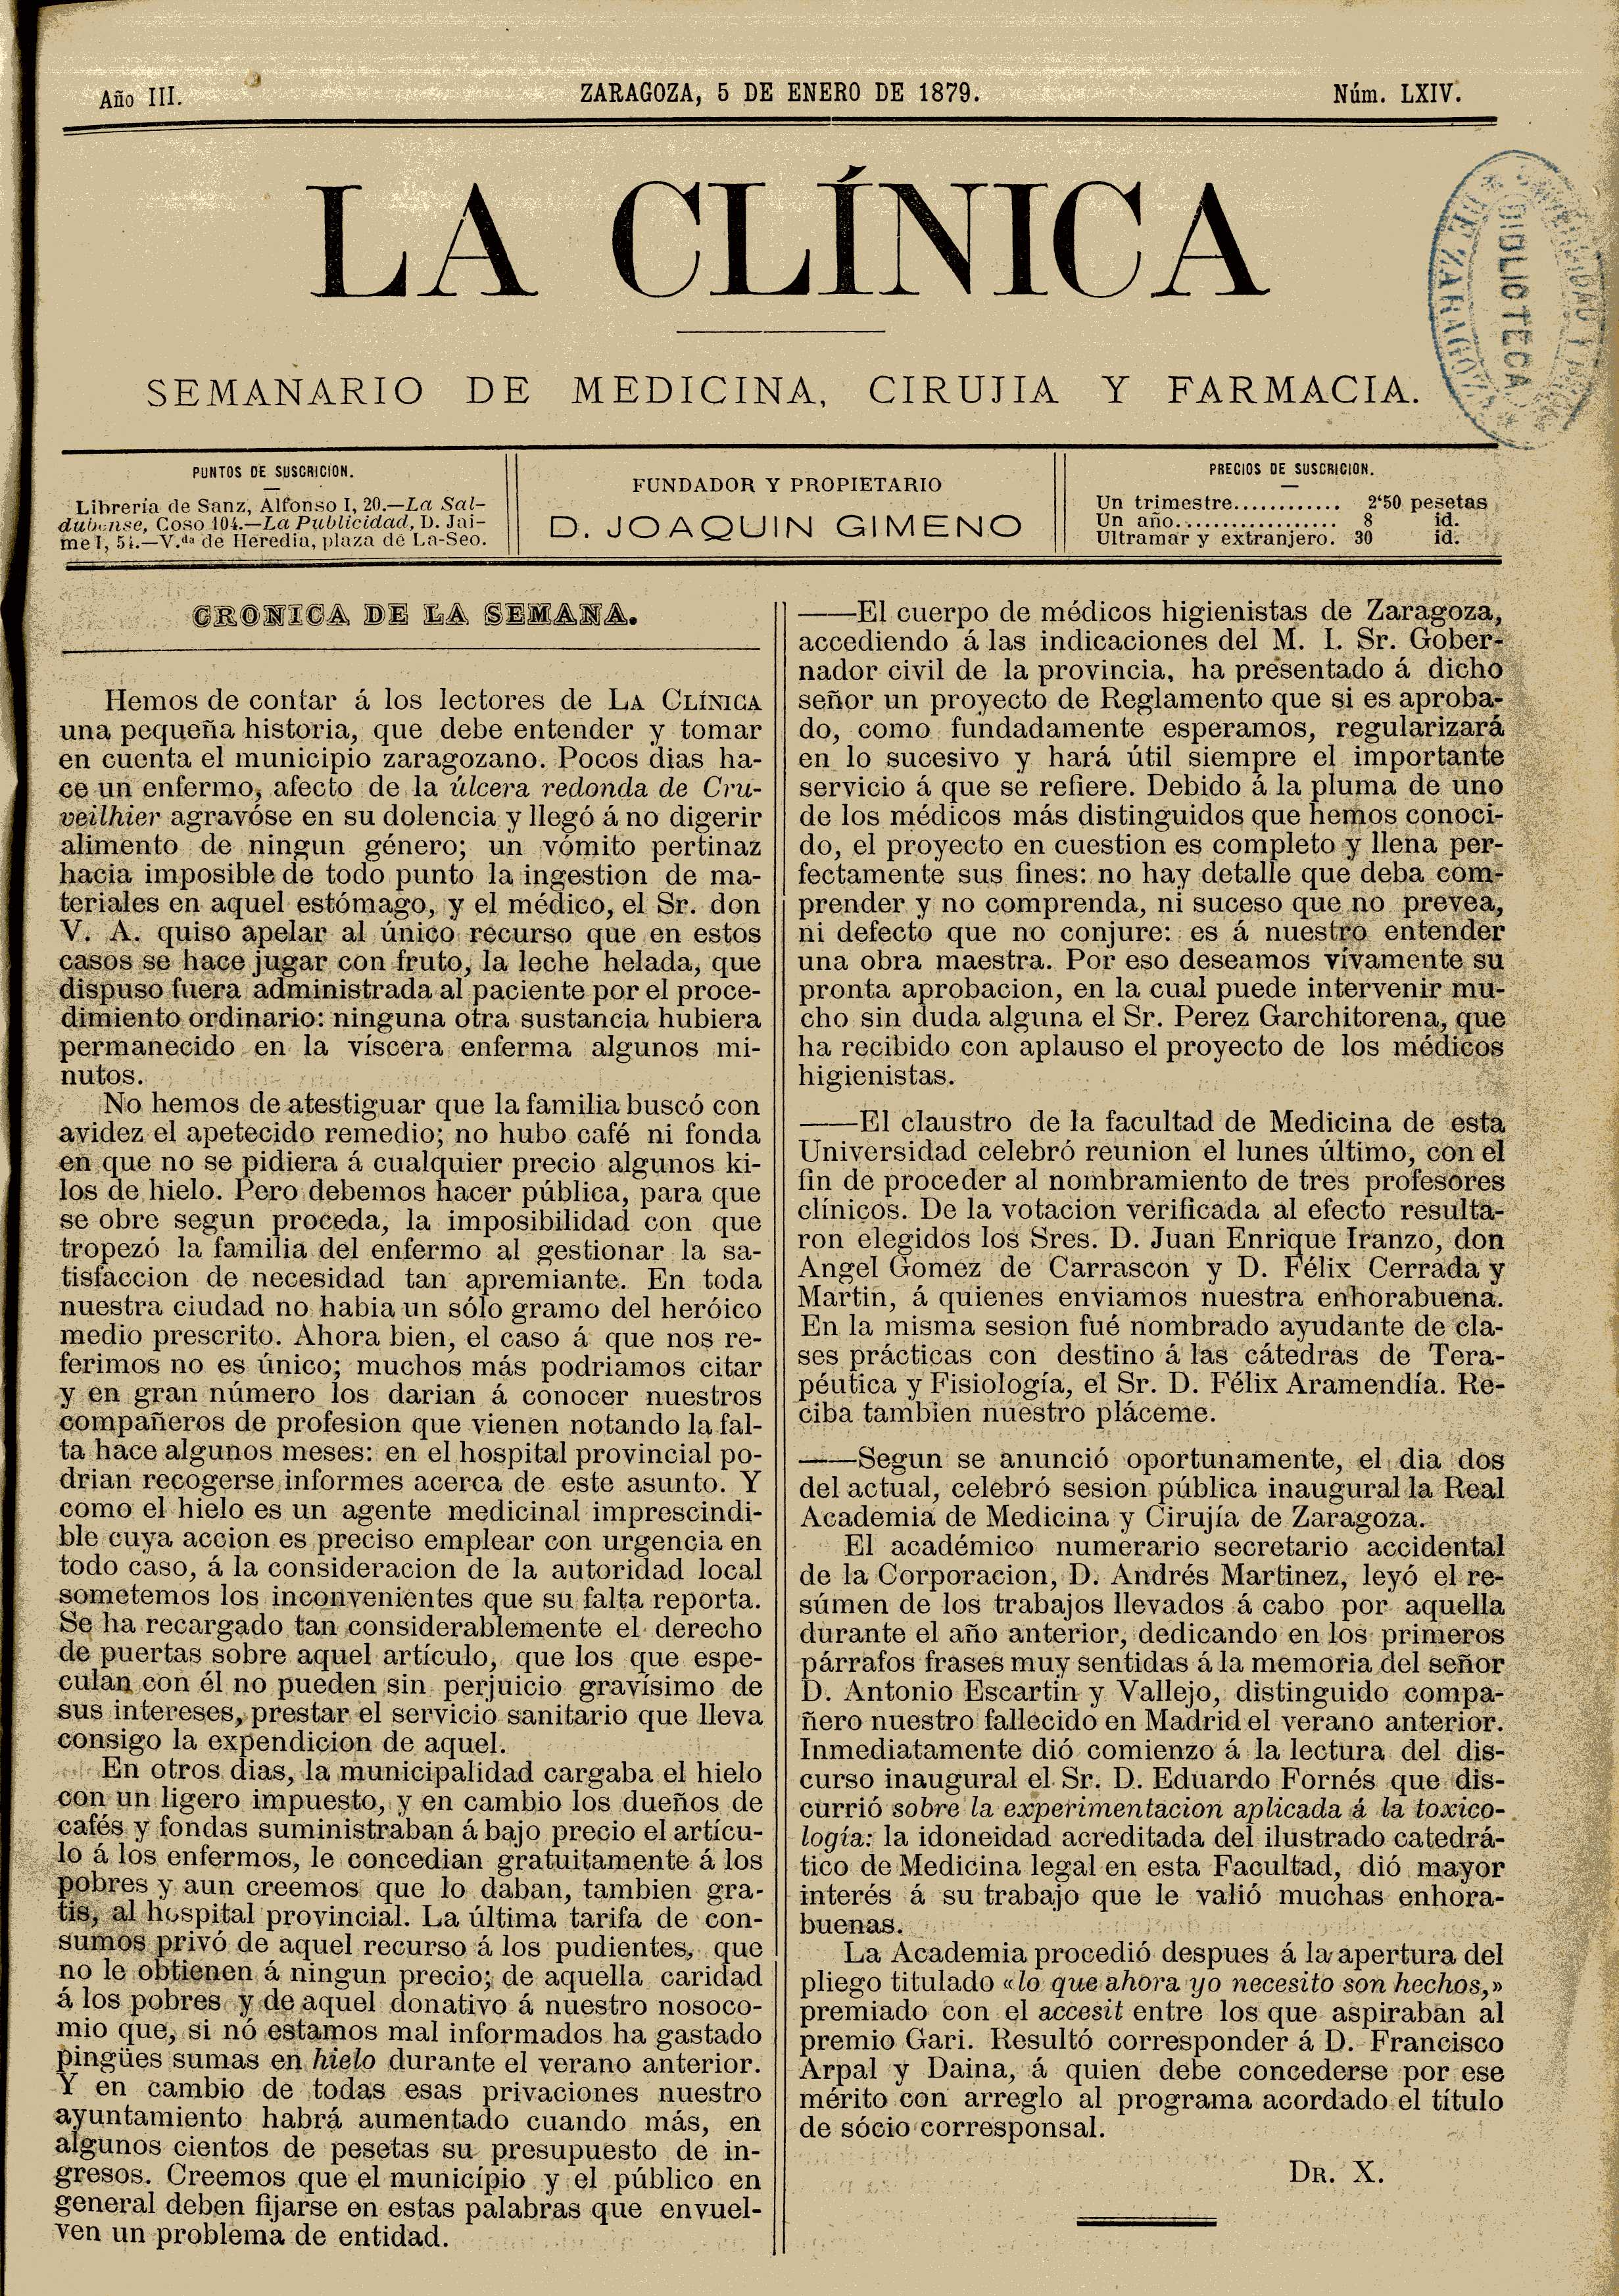 La Clínica (Zaragoza), III (1879)